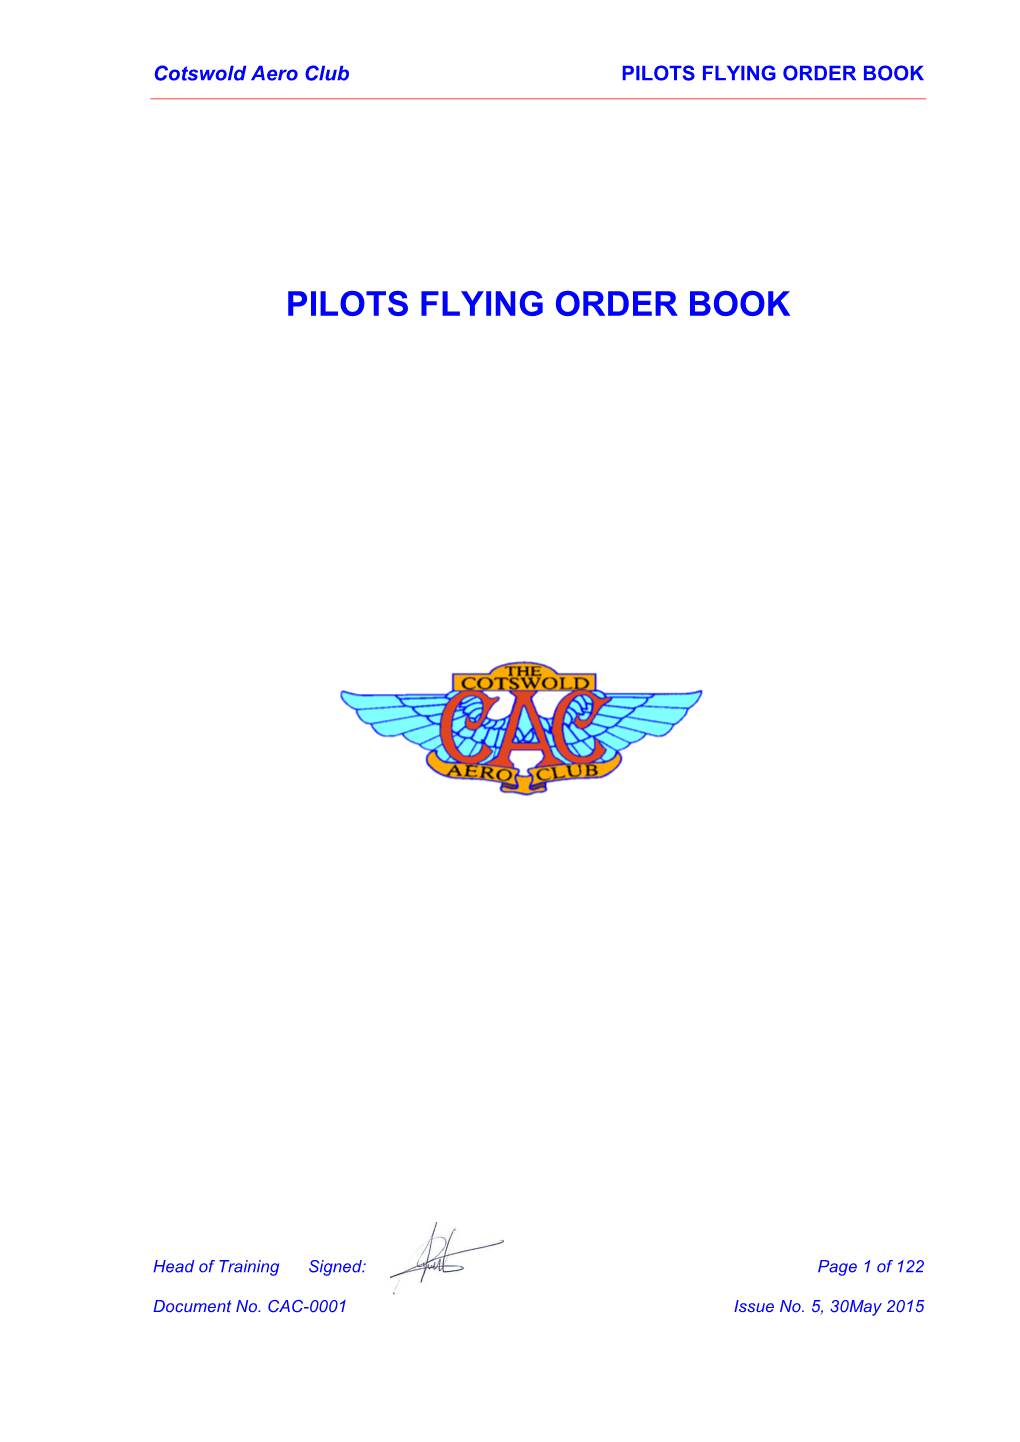 Pilots Flying Order Book